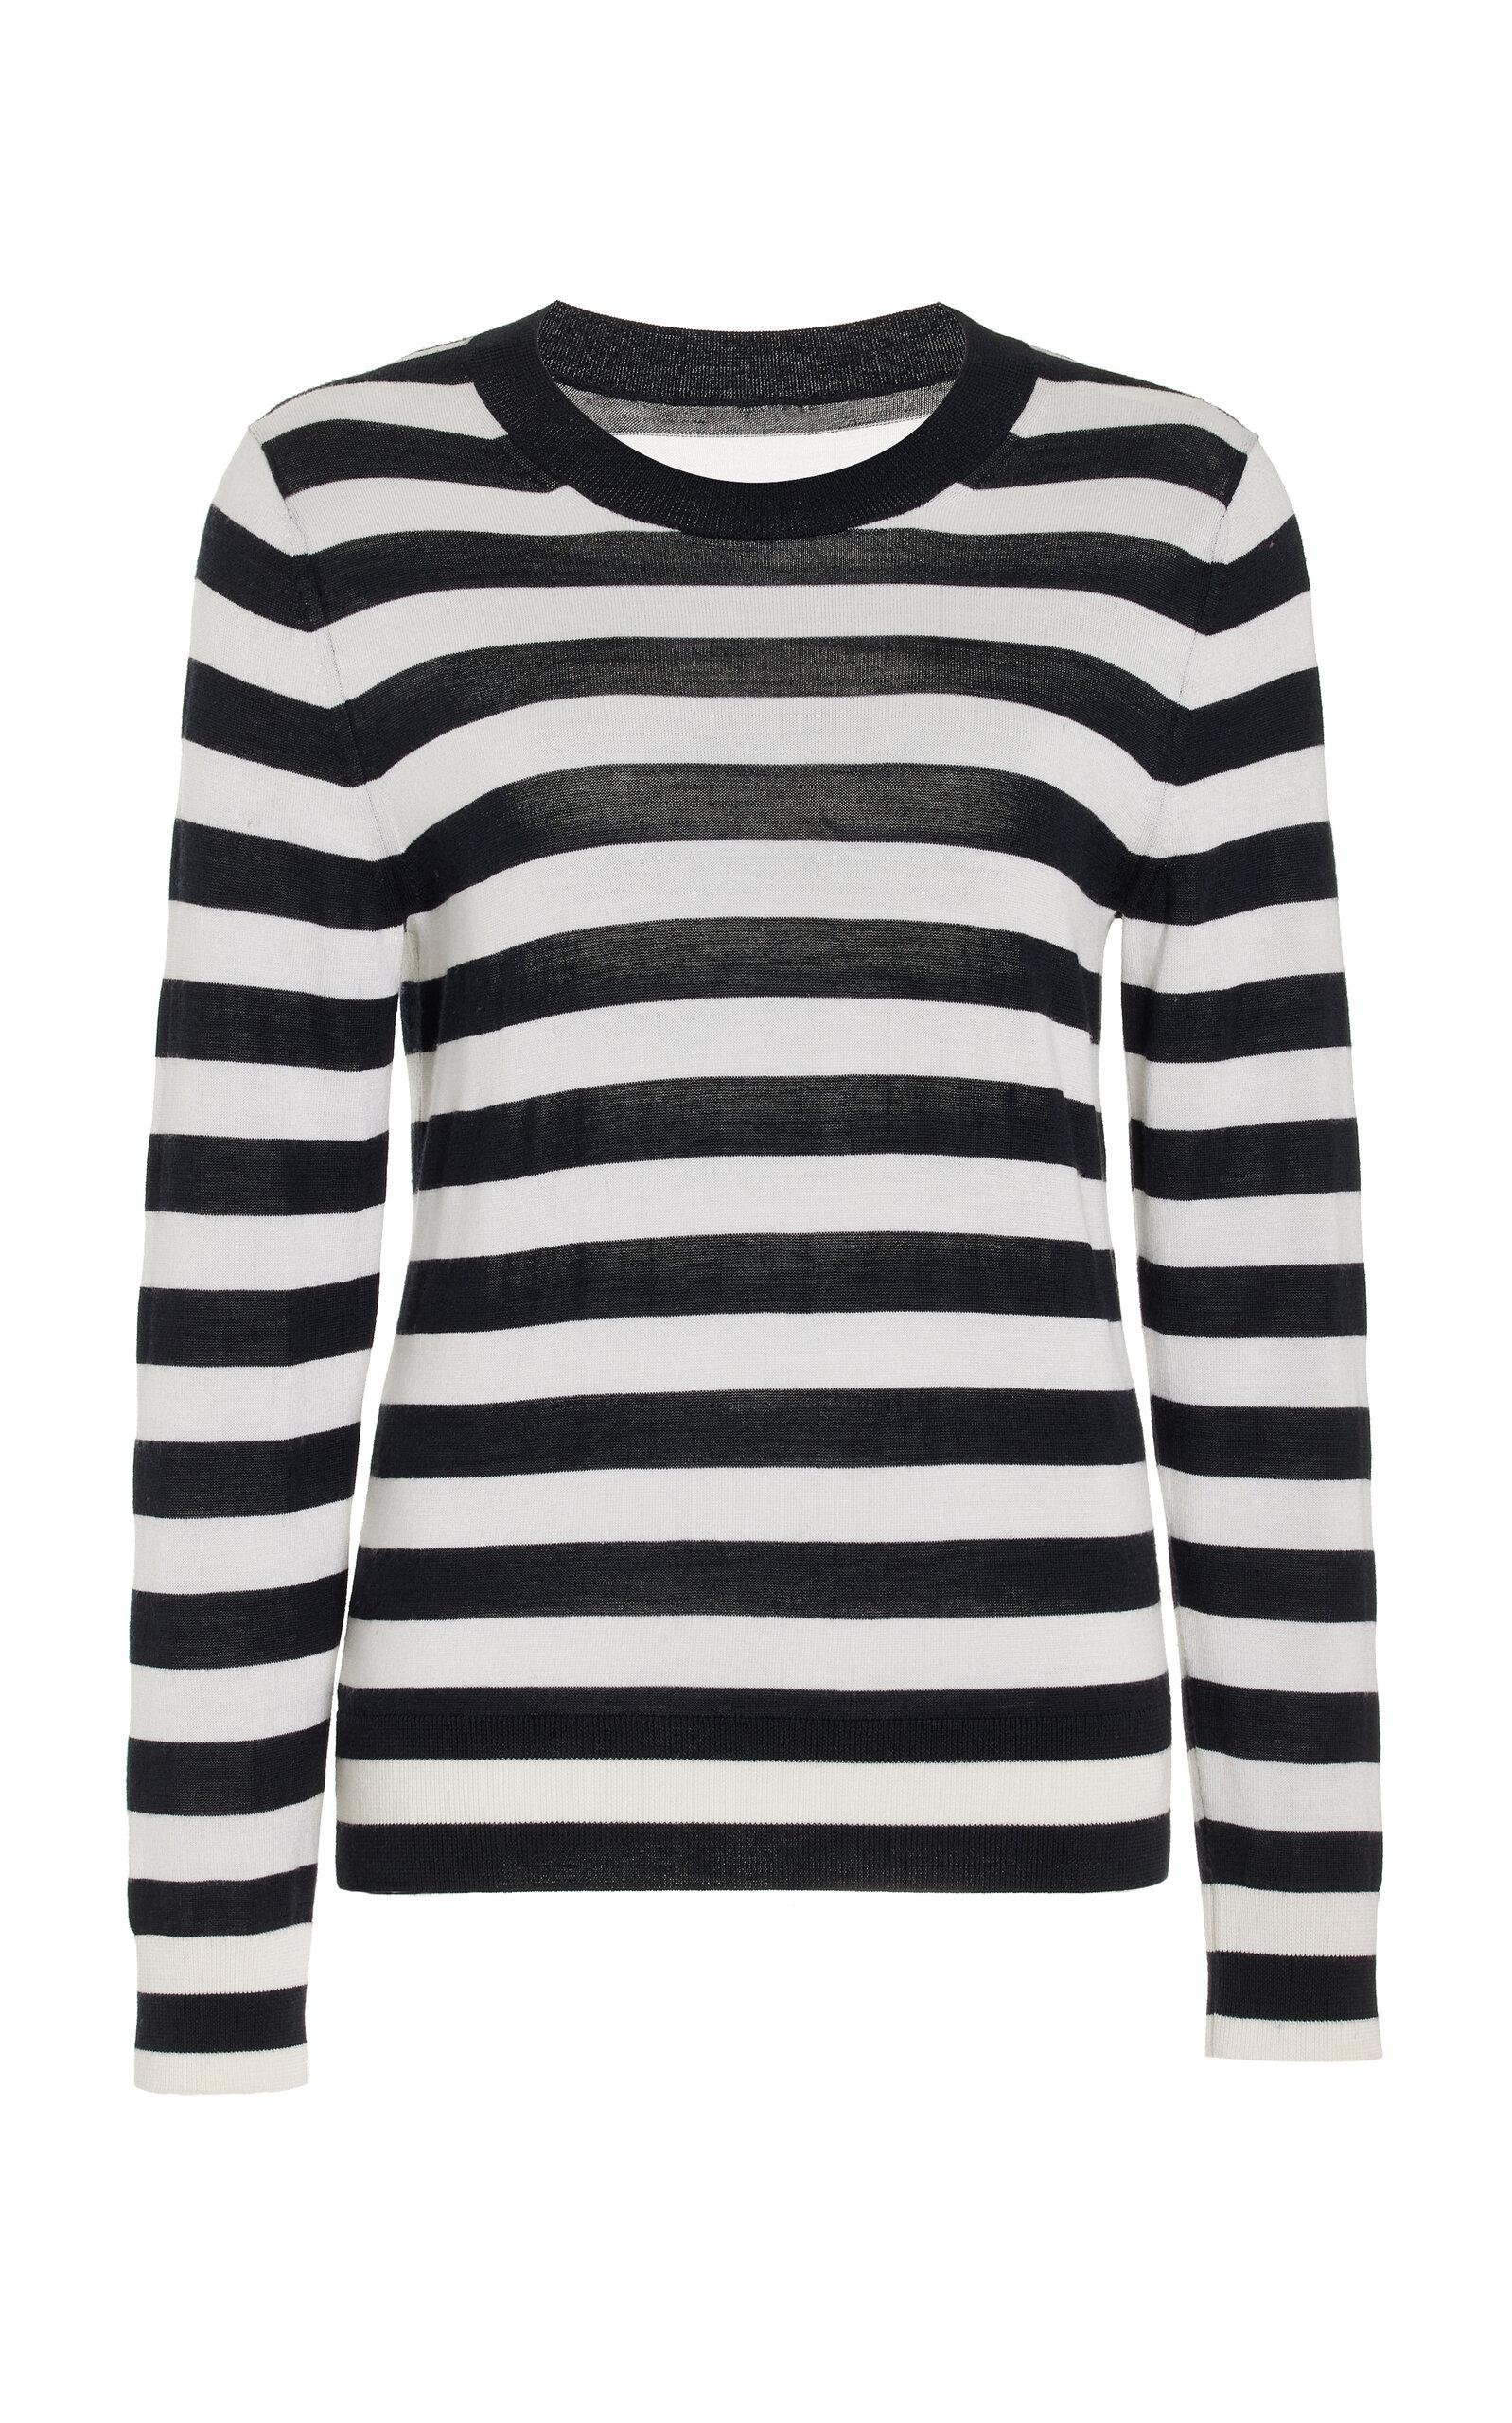 NILI LOTAN - Meir Merino Wool And Silk-Blend Sweater - Stripe - S - Moda Operandi by NILI LOTAN